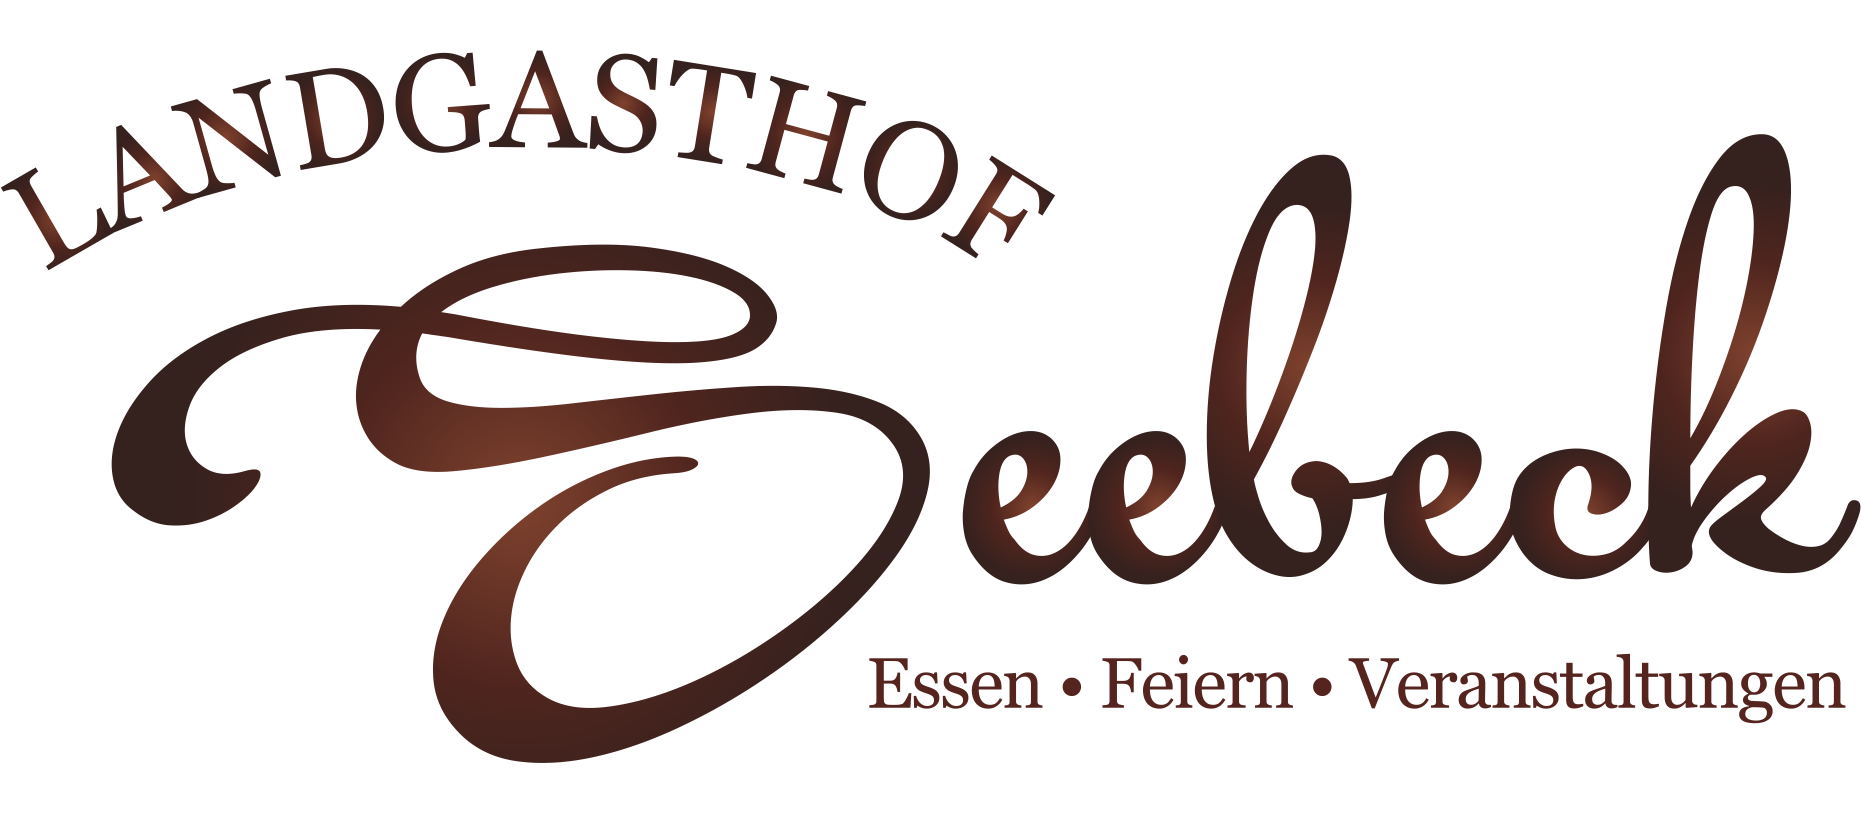 logo-landgasthof-seebeck